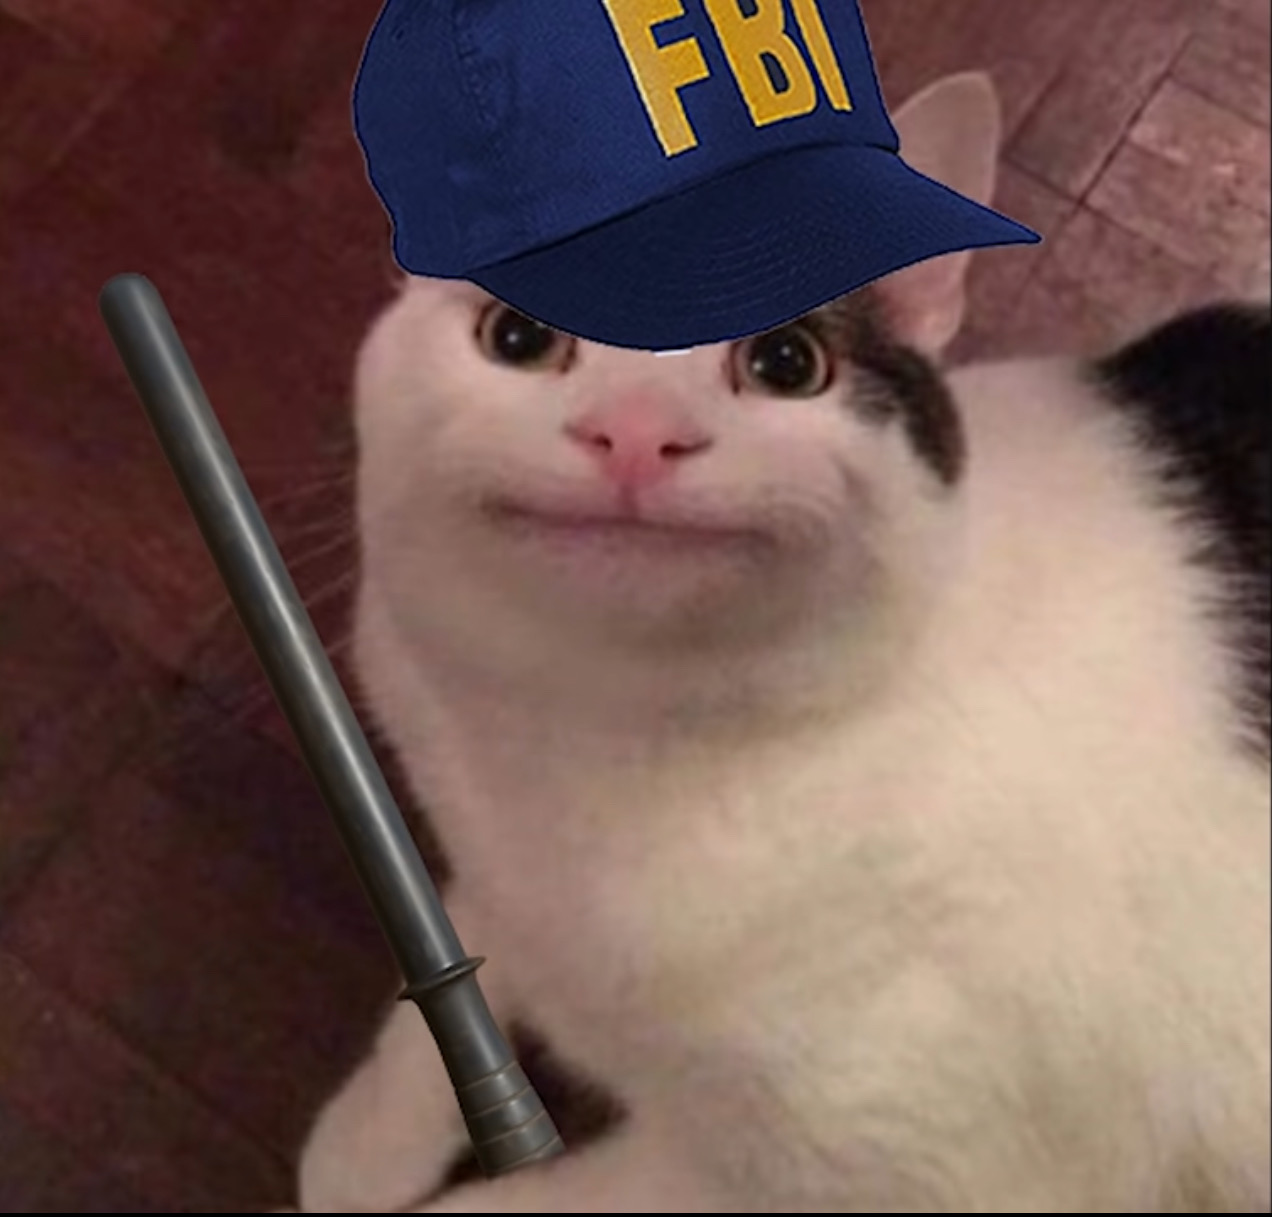 FBI beluga Blank Meme Template